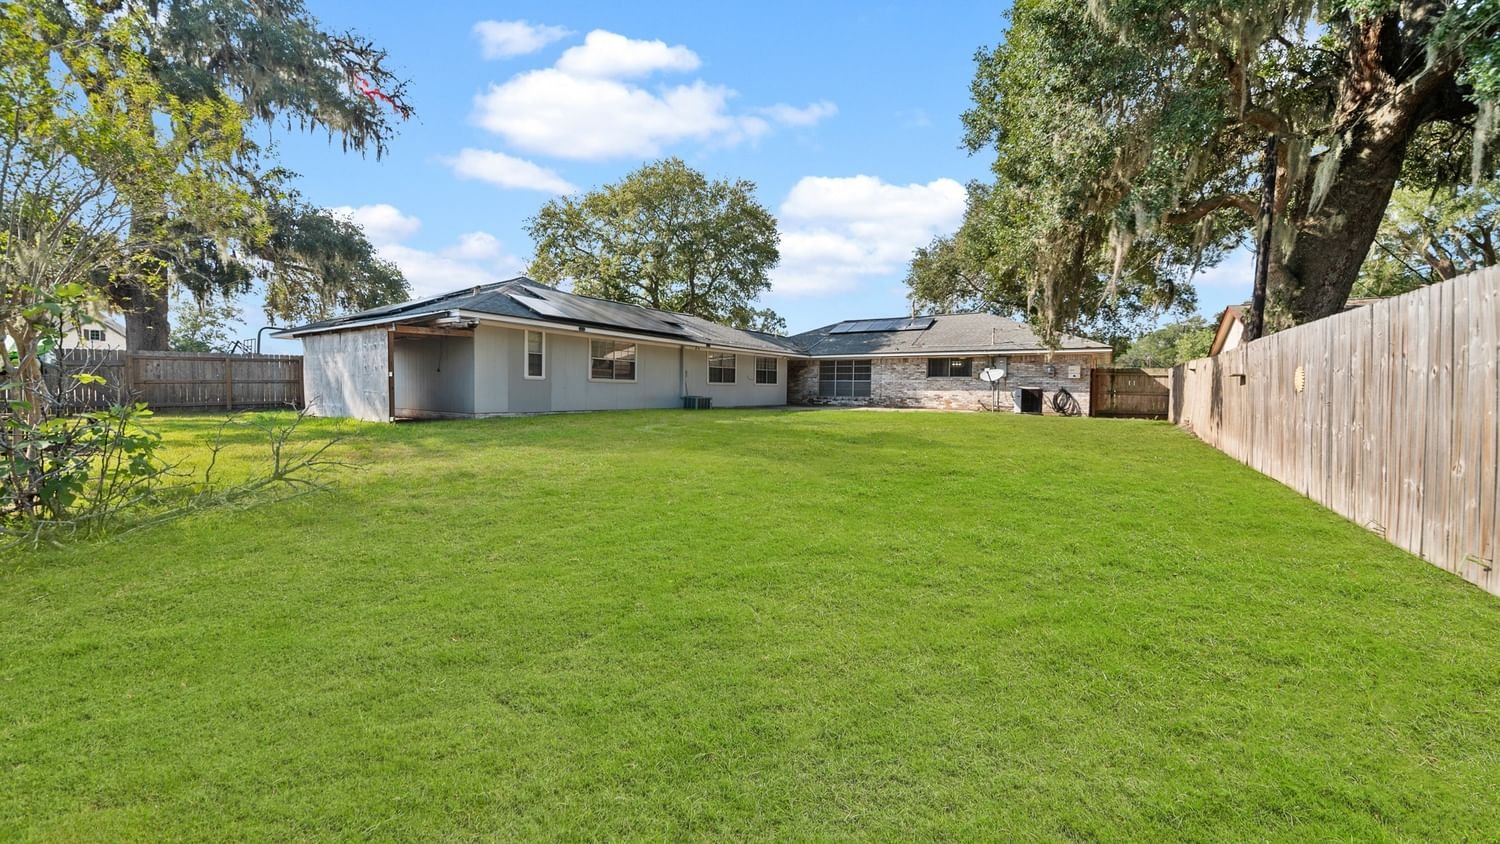 Real estate property located at 419 Petunia, Brazoria, Lake Jackson, TX, US